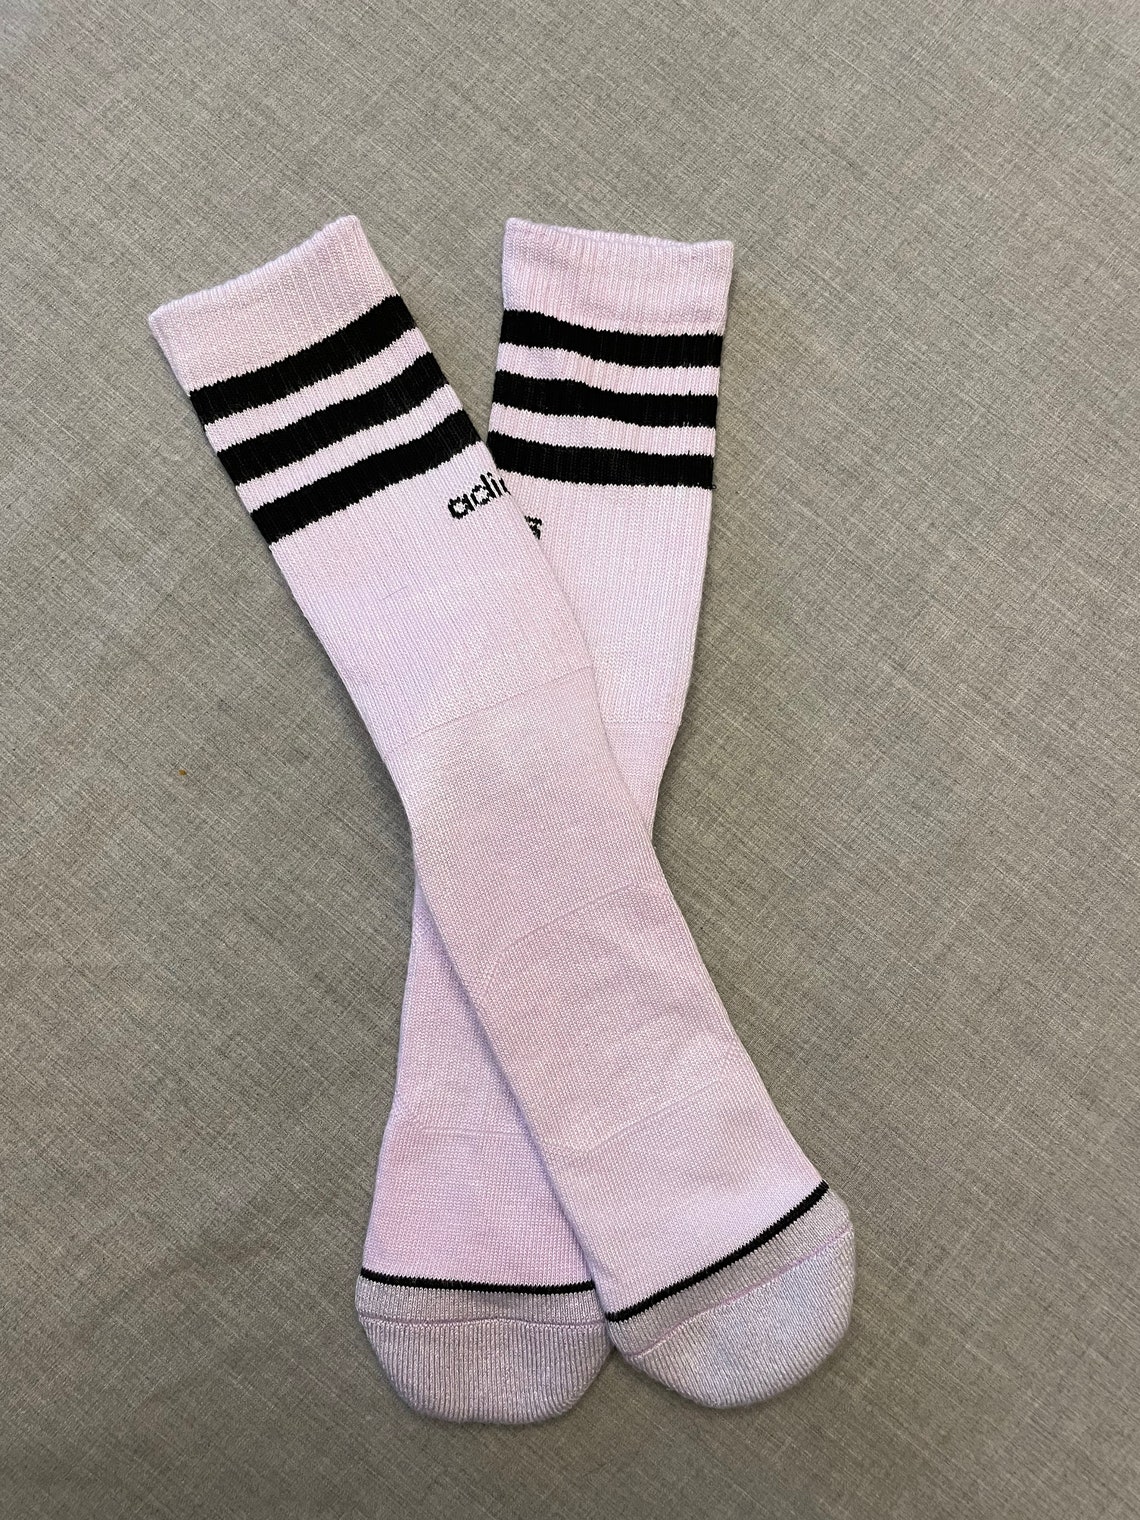 Pink Sky Stripped Adidas socks | Etsy